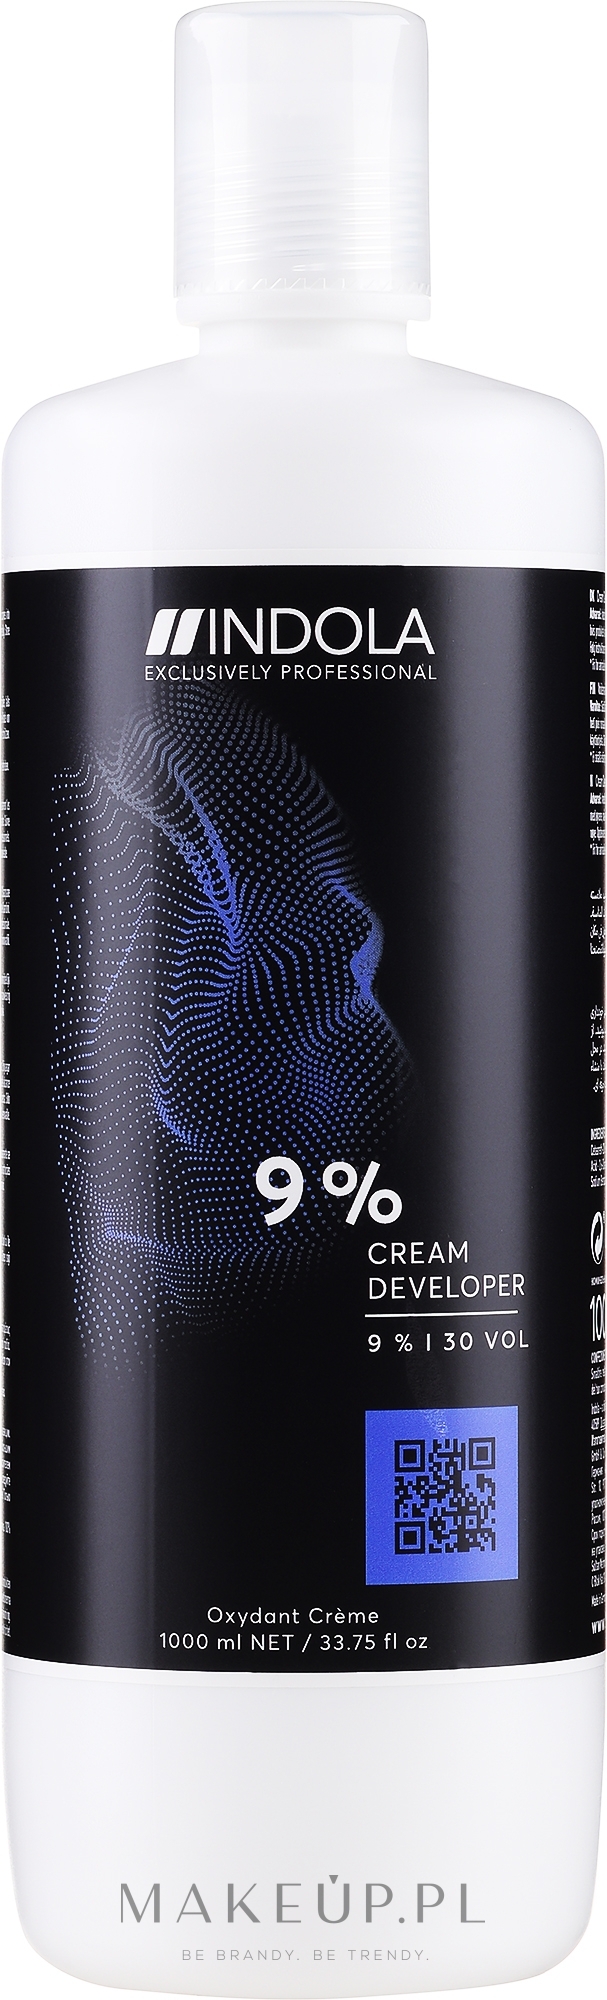 Krem-utleniacz 9% 30 vol - Indola Profession Cream Developer 9% 30 vol — Zdjęcie 1000 ml